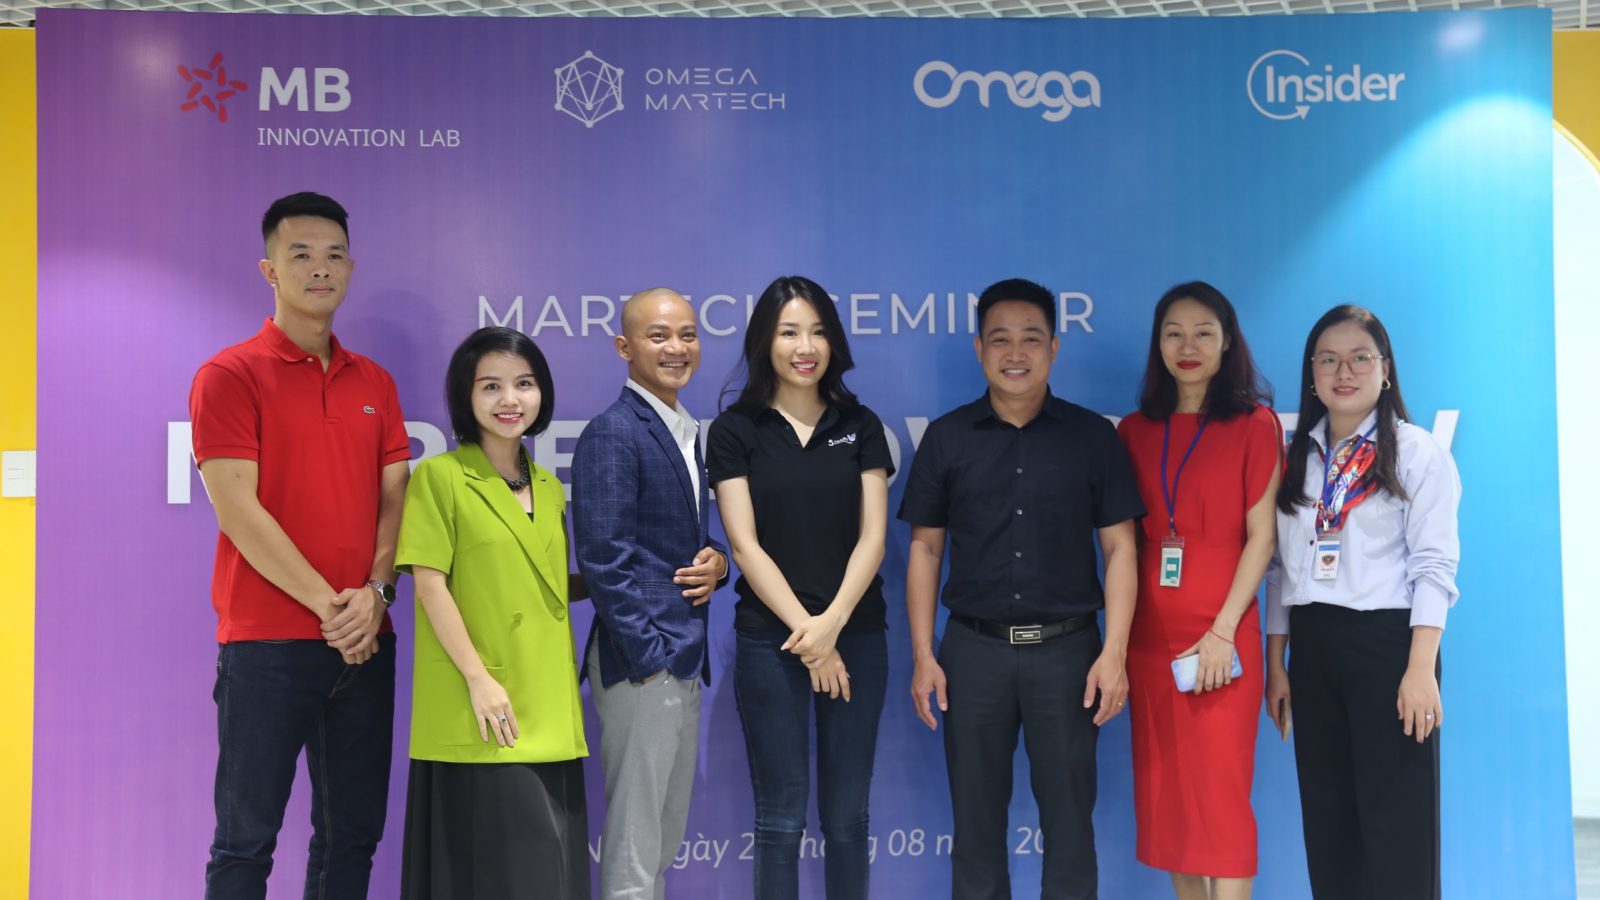 Omega Martech & MB Innovation Lab